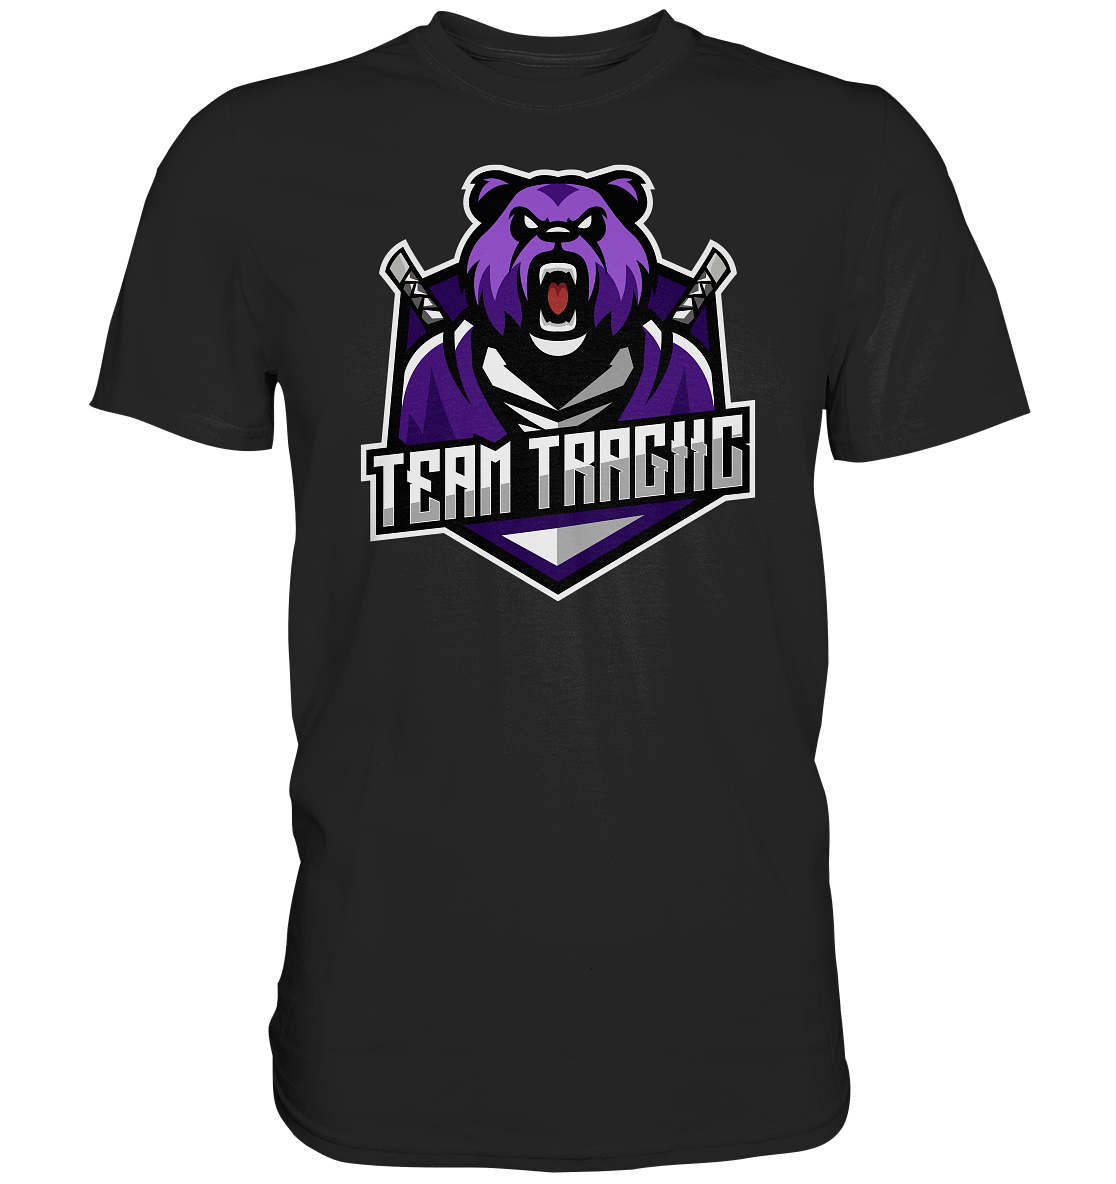 TEAM TRAGIIC - Basic Shirt